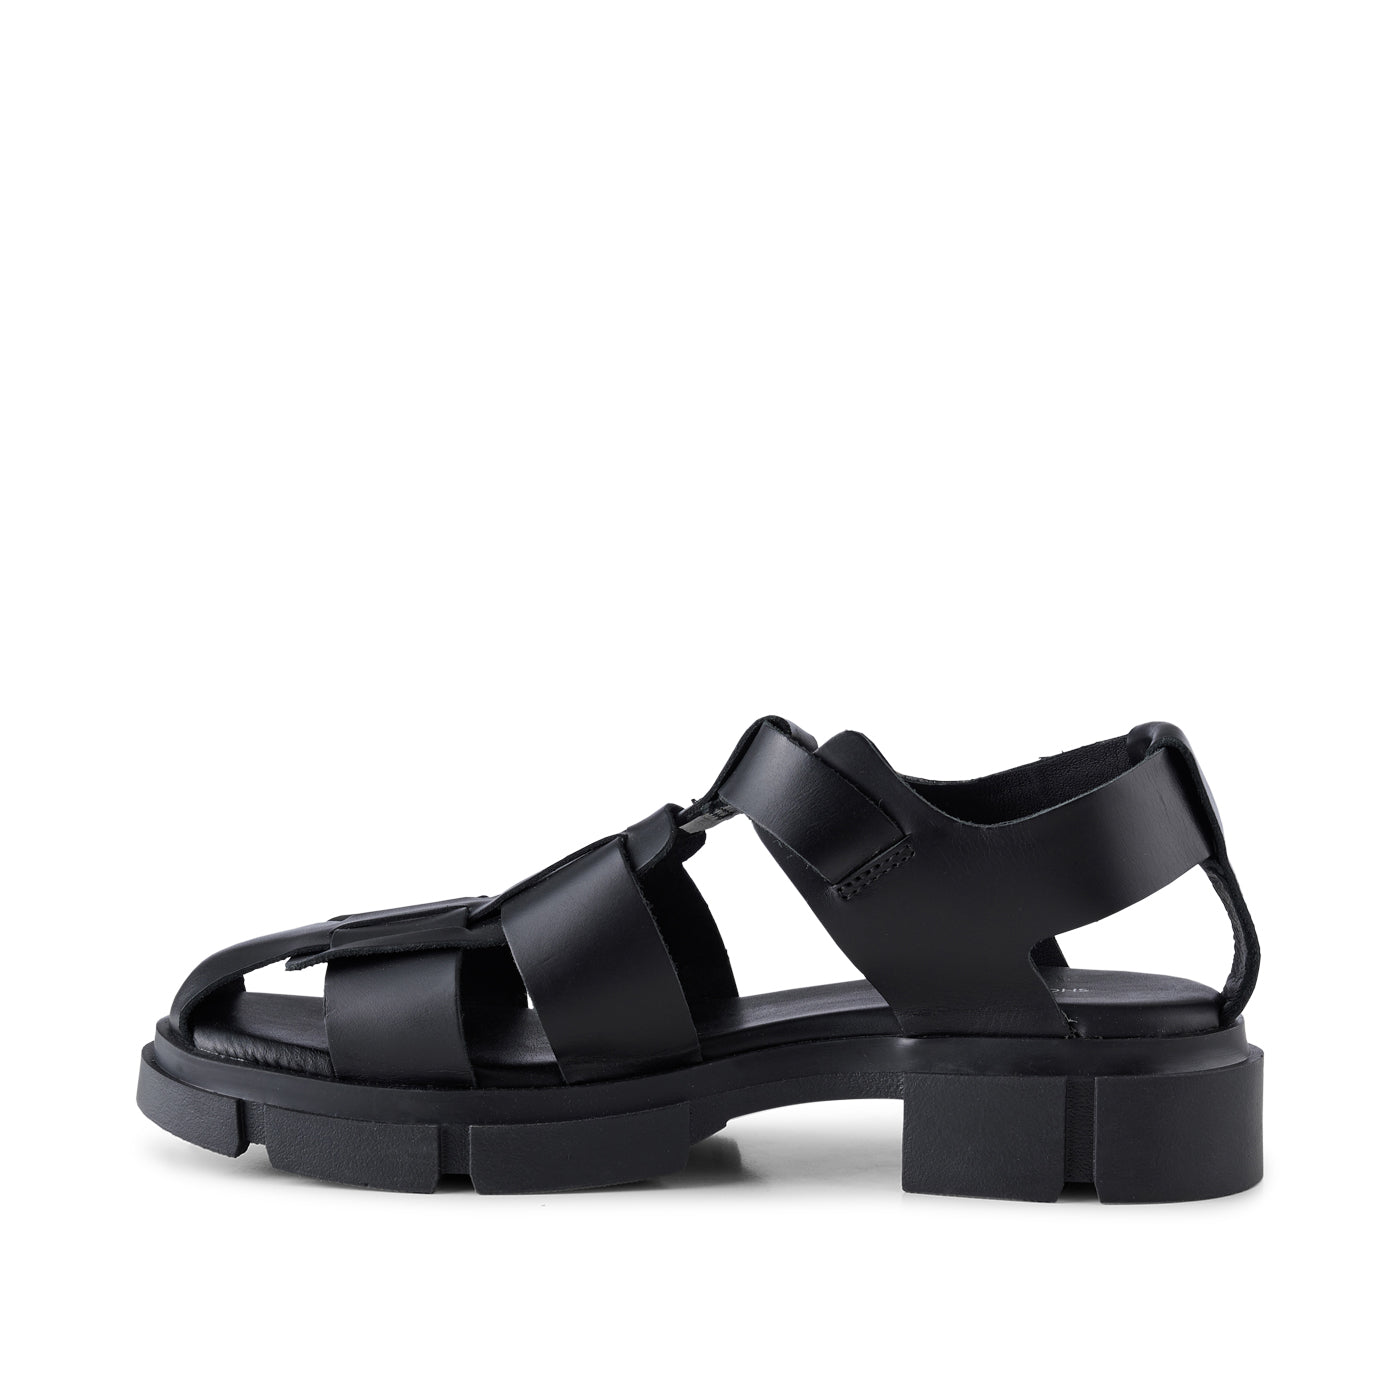 SHOE THE BEAR WOMENS Alva sandal læder Sandals 020 Black